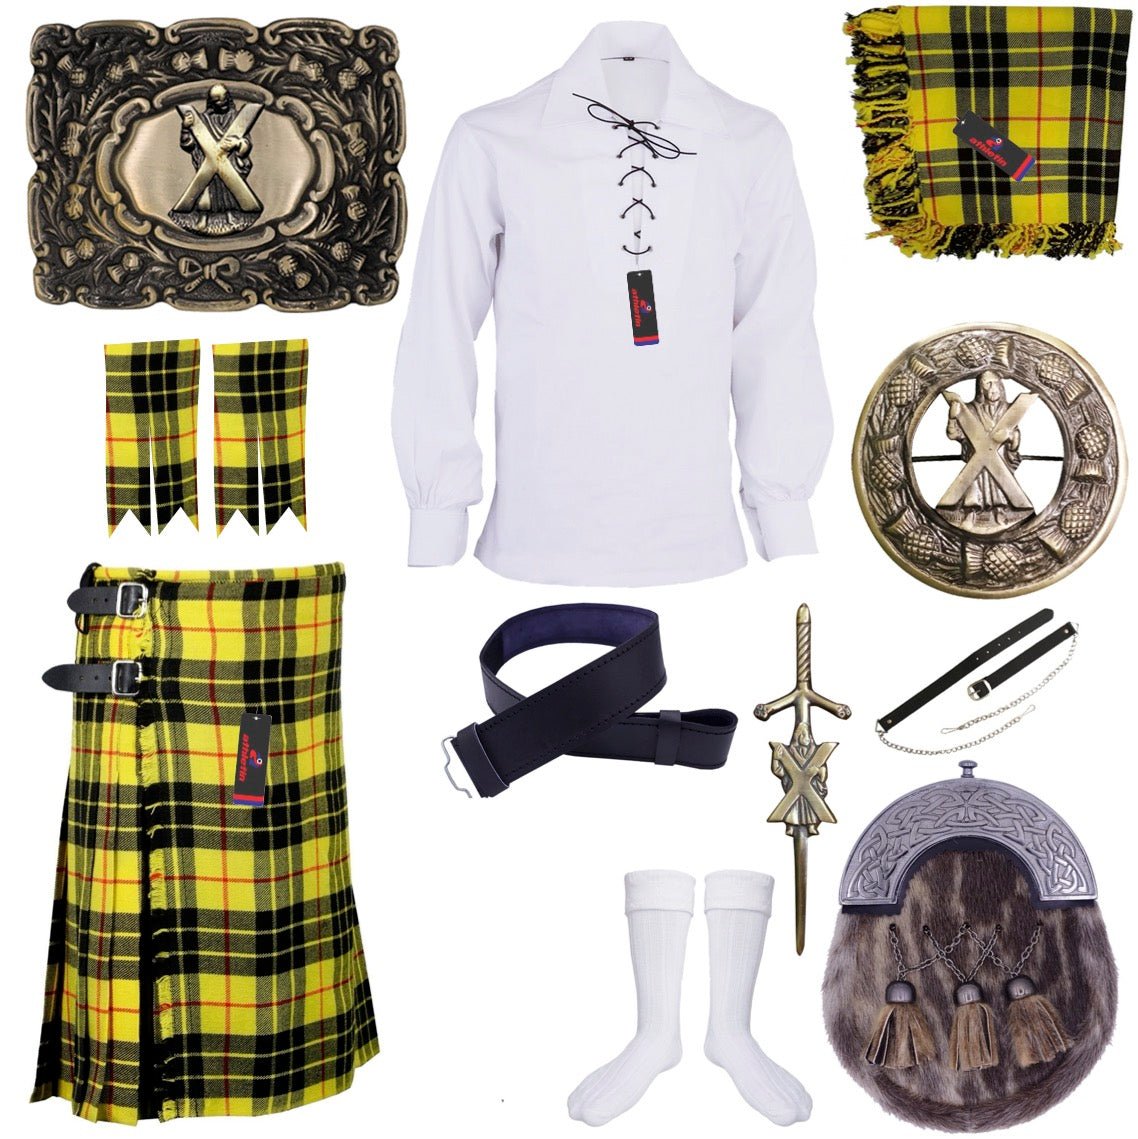 Macleod of Lewis Tartan Kilt Outfit